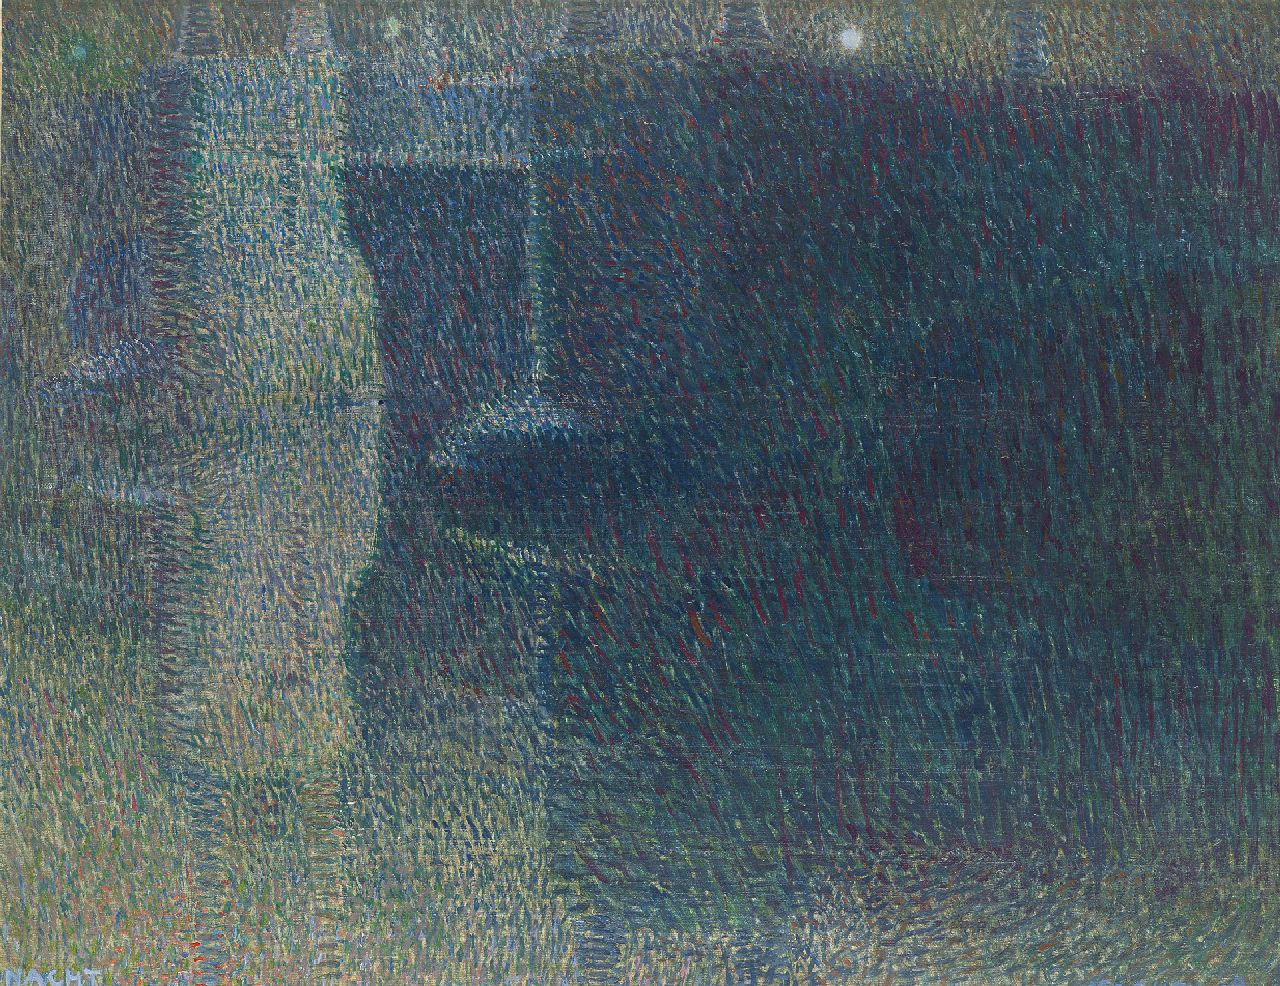 Gestel L.  | Leendert 'Leo' Gestel, Night (the Amstel Bridge over the Amstel River in Amsterdam), Öl auf Leinwand 52,0 x 64,8 cm, signed l.r. und dated '08